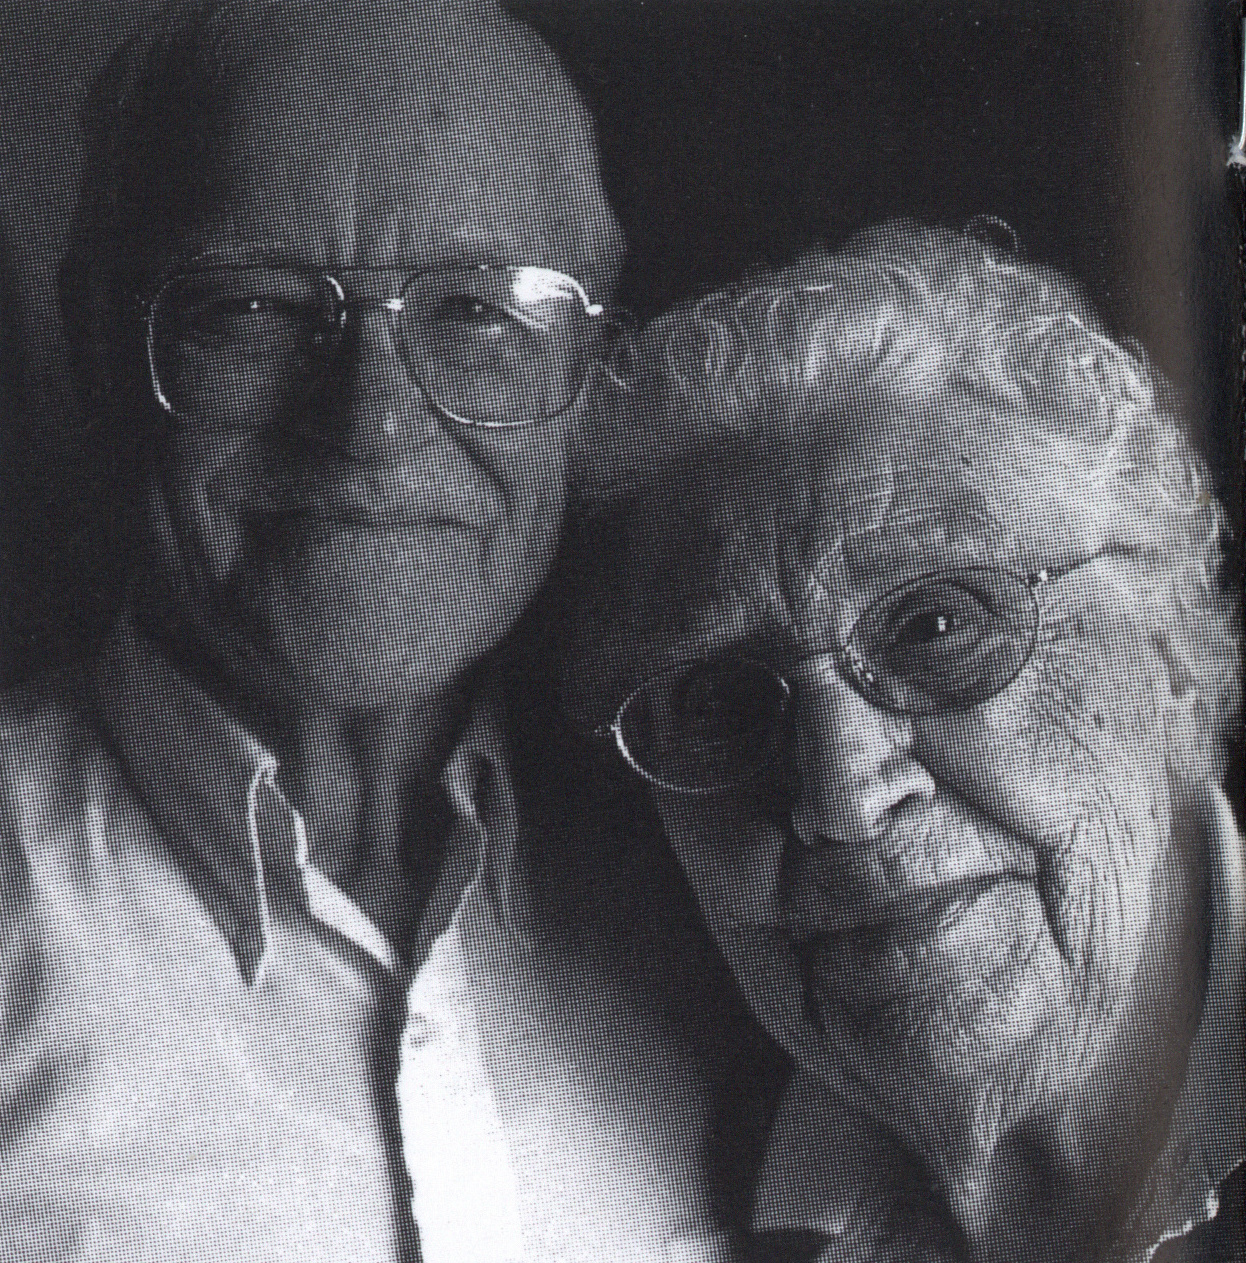 Mary Borgman with her husband, Raymond Borgman